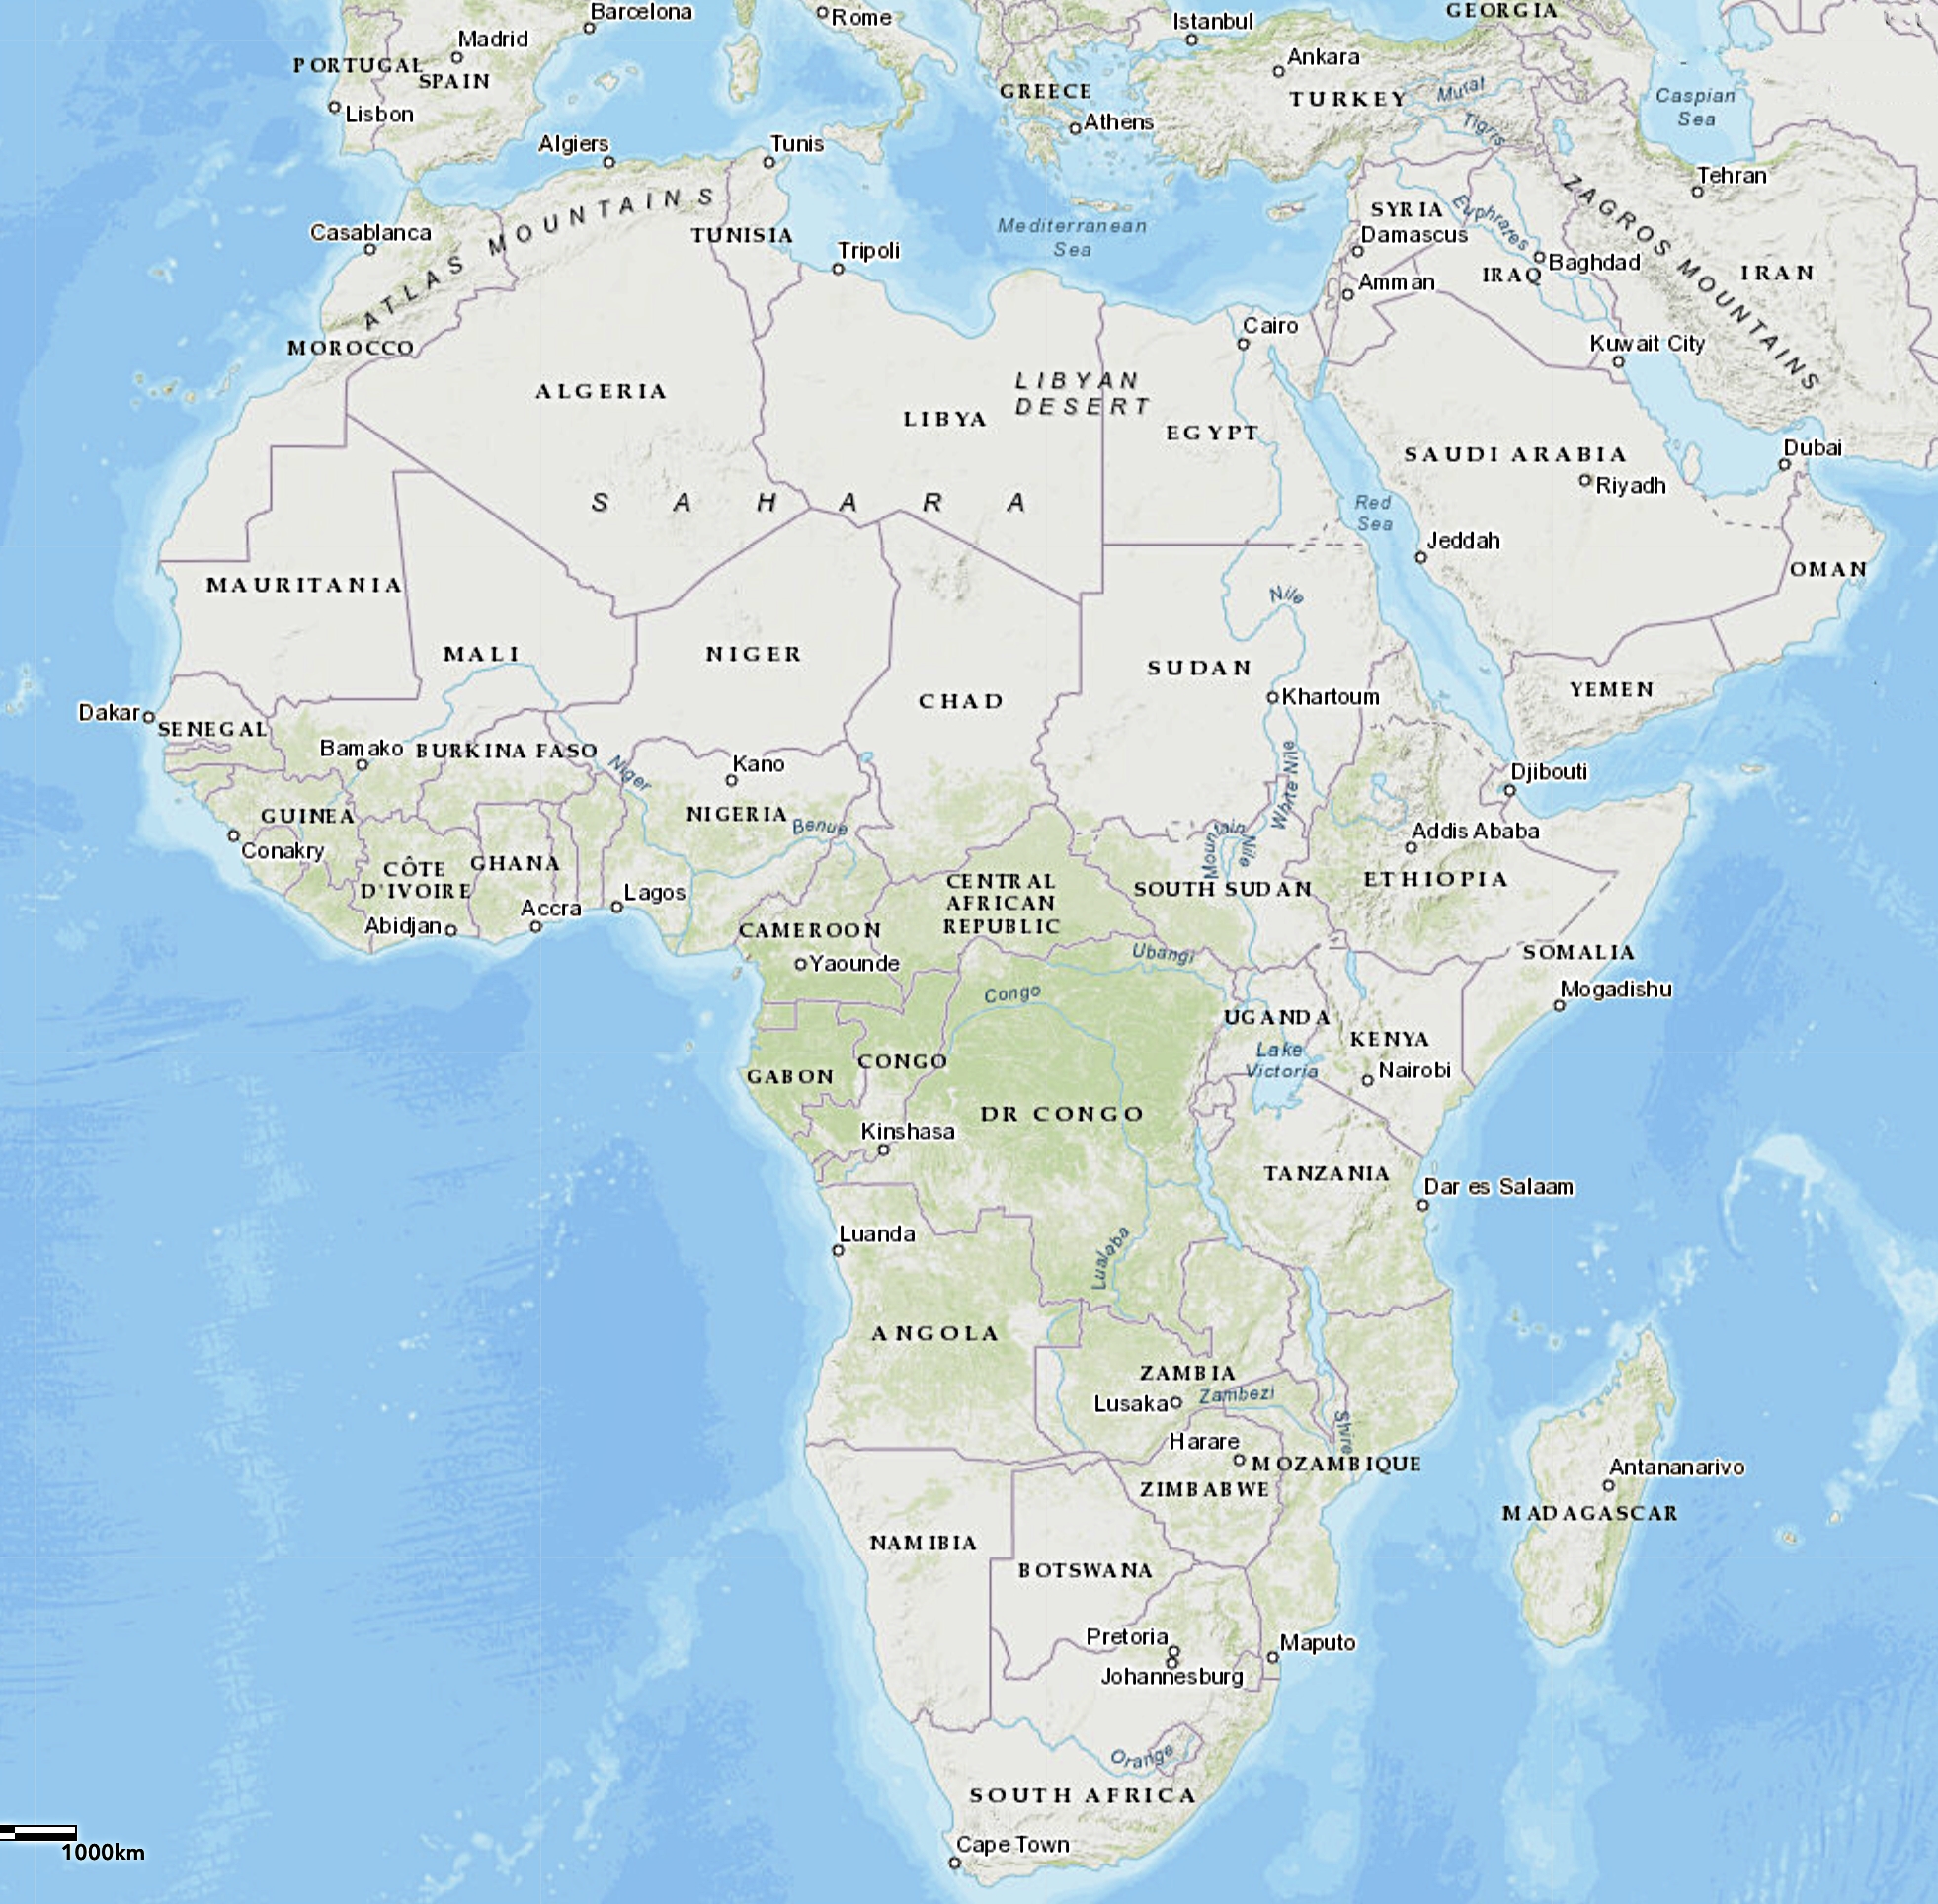 Map of Africa (Harvard WorldMap)